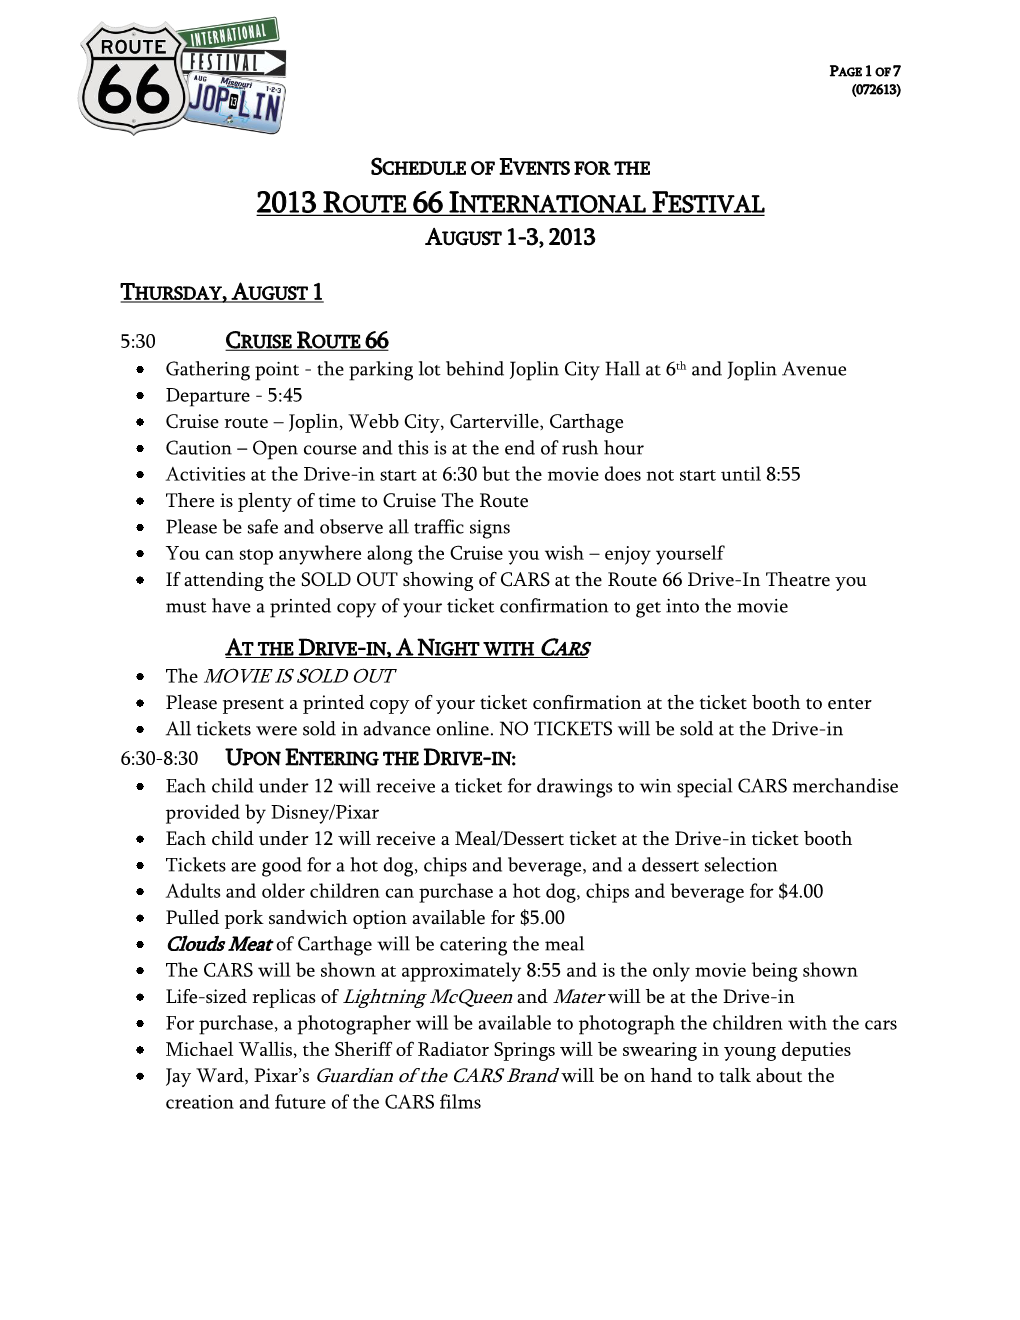 2013 Route 66 International Festival August 1-3, 2013